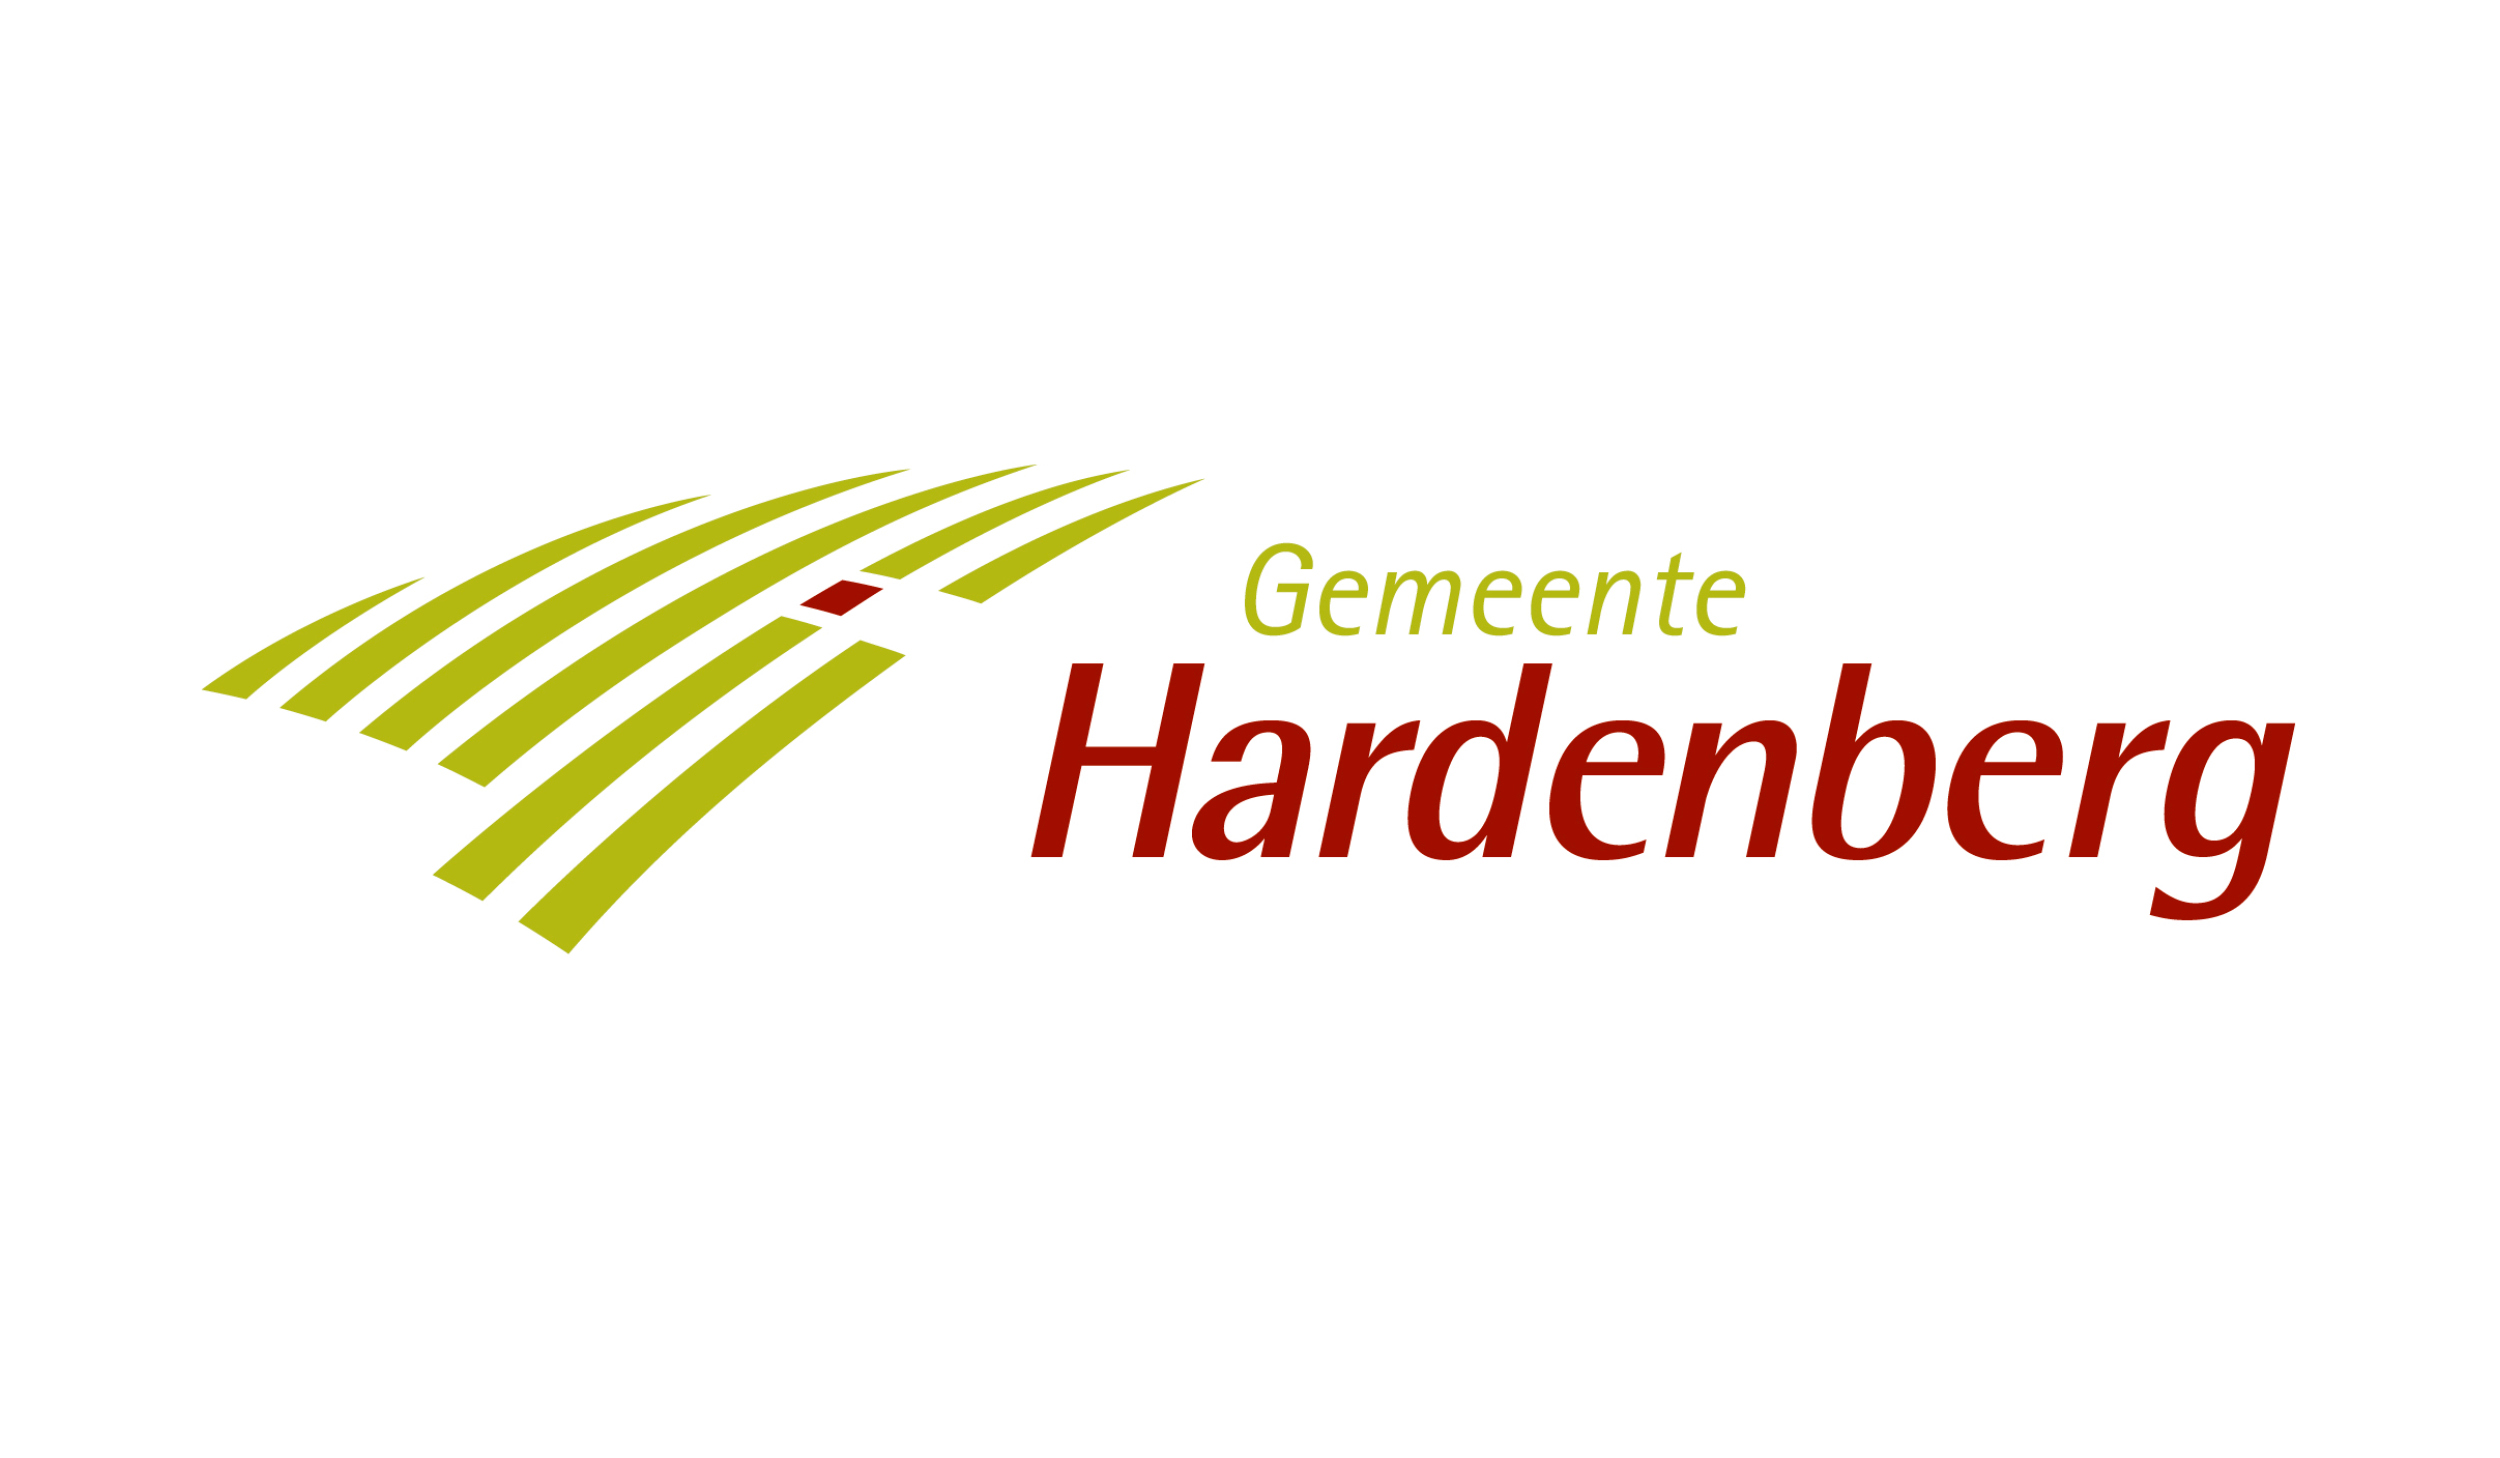 Hardenberg logo